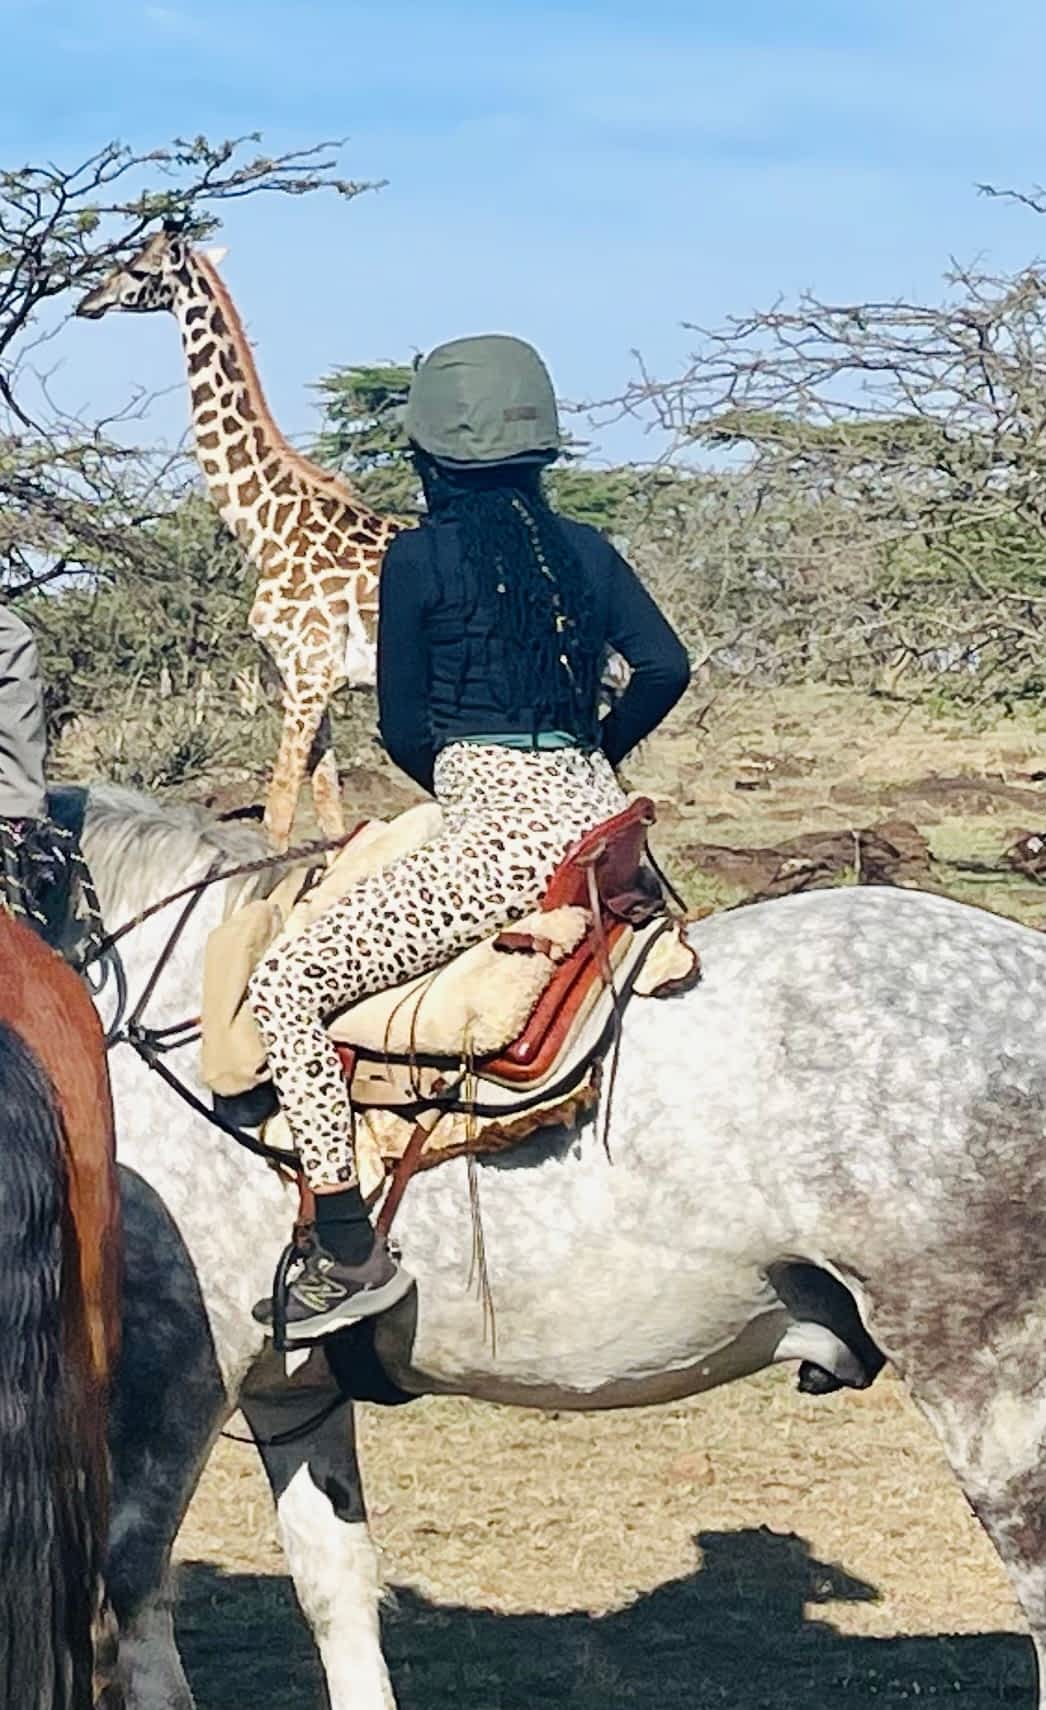 Horse ride along side wildlfie in Kenya